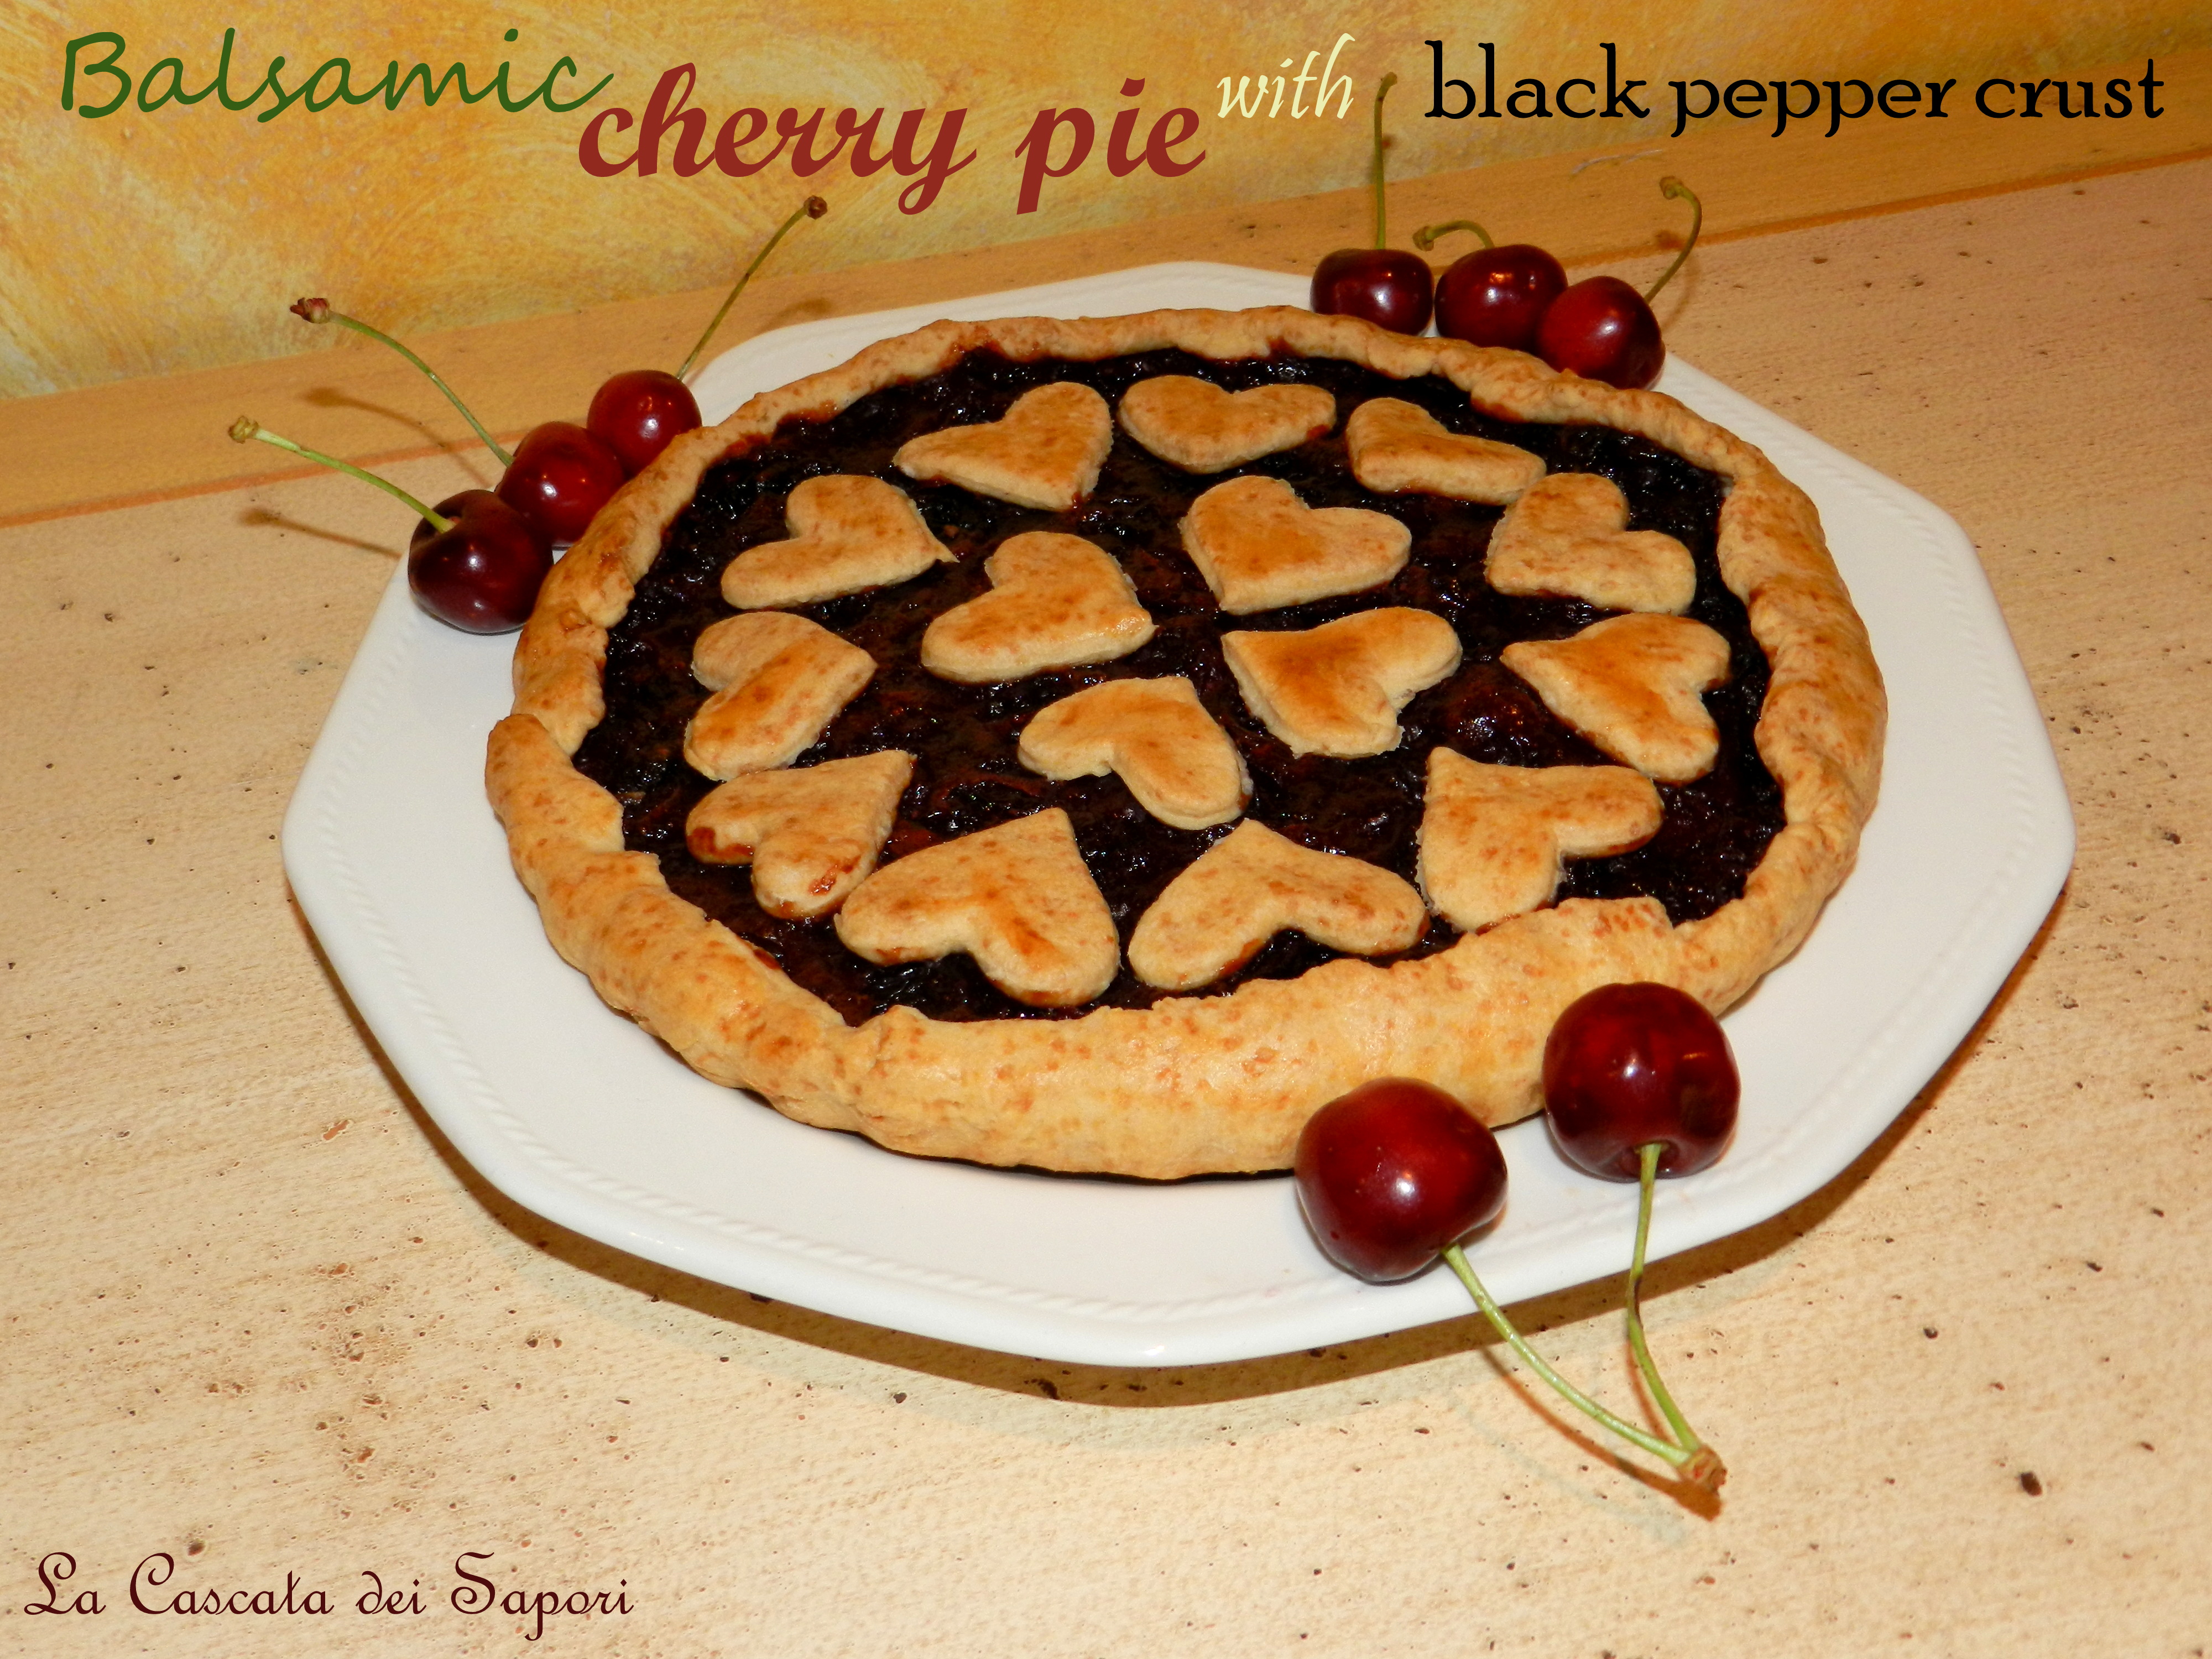 Balsamic cherry pie with black pepper crust